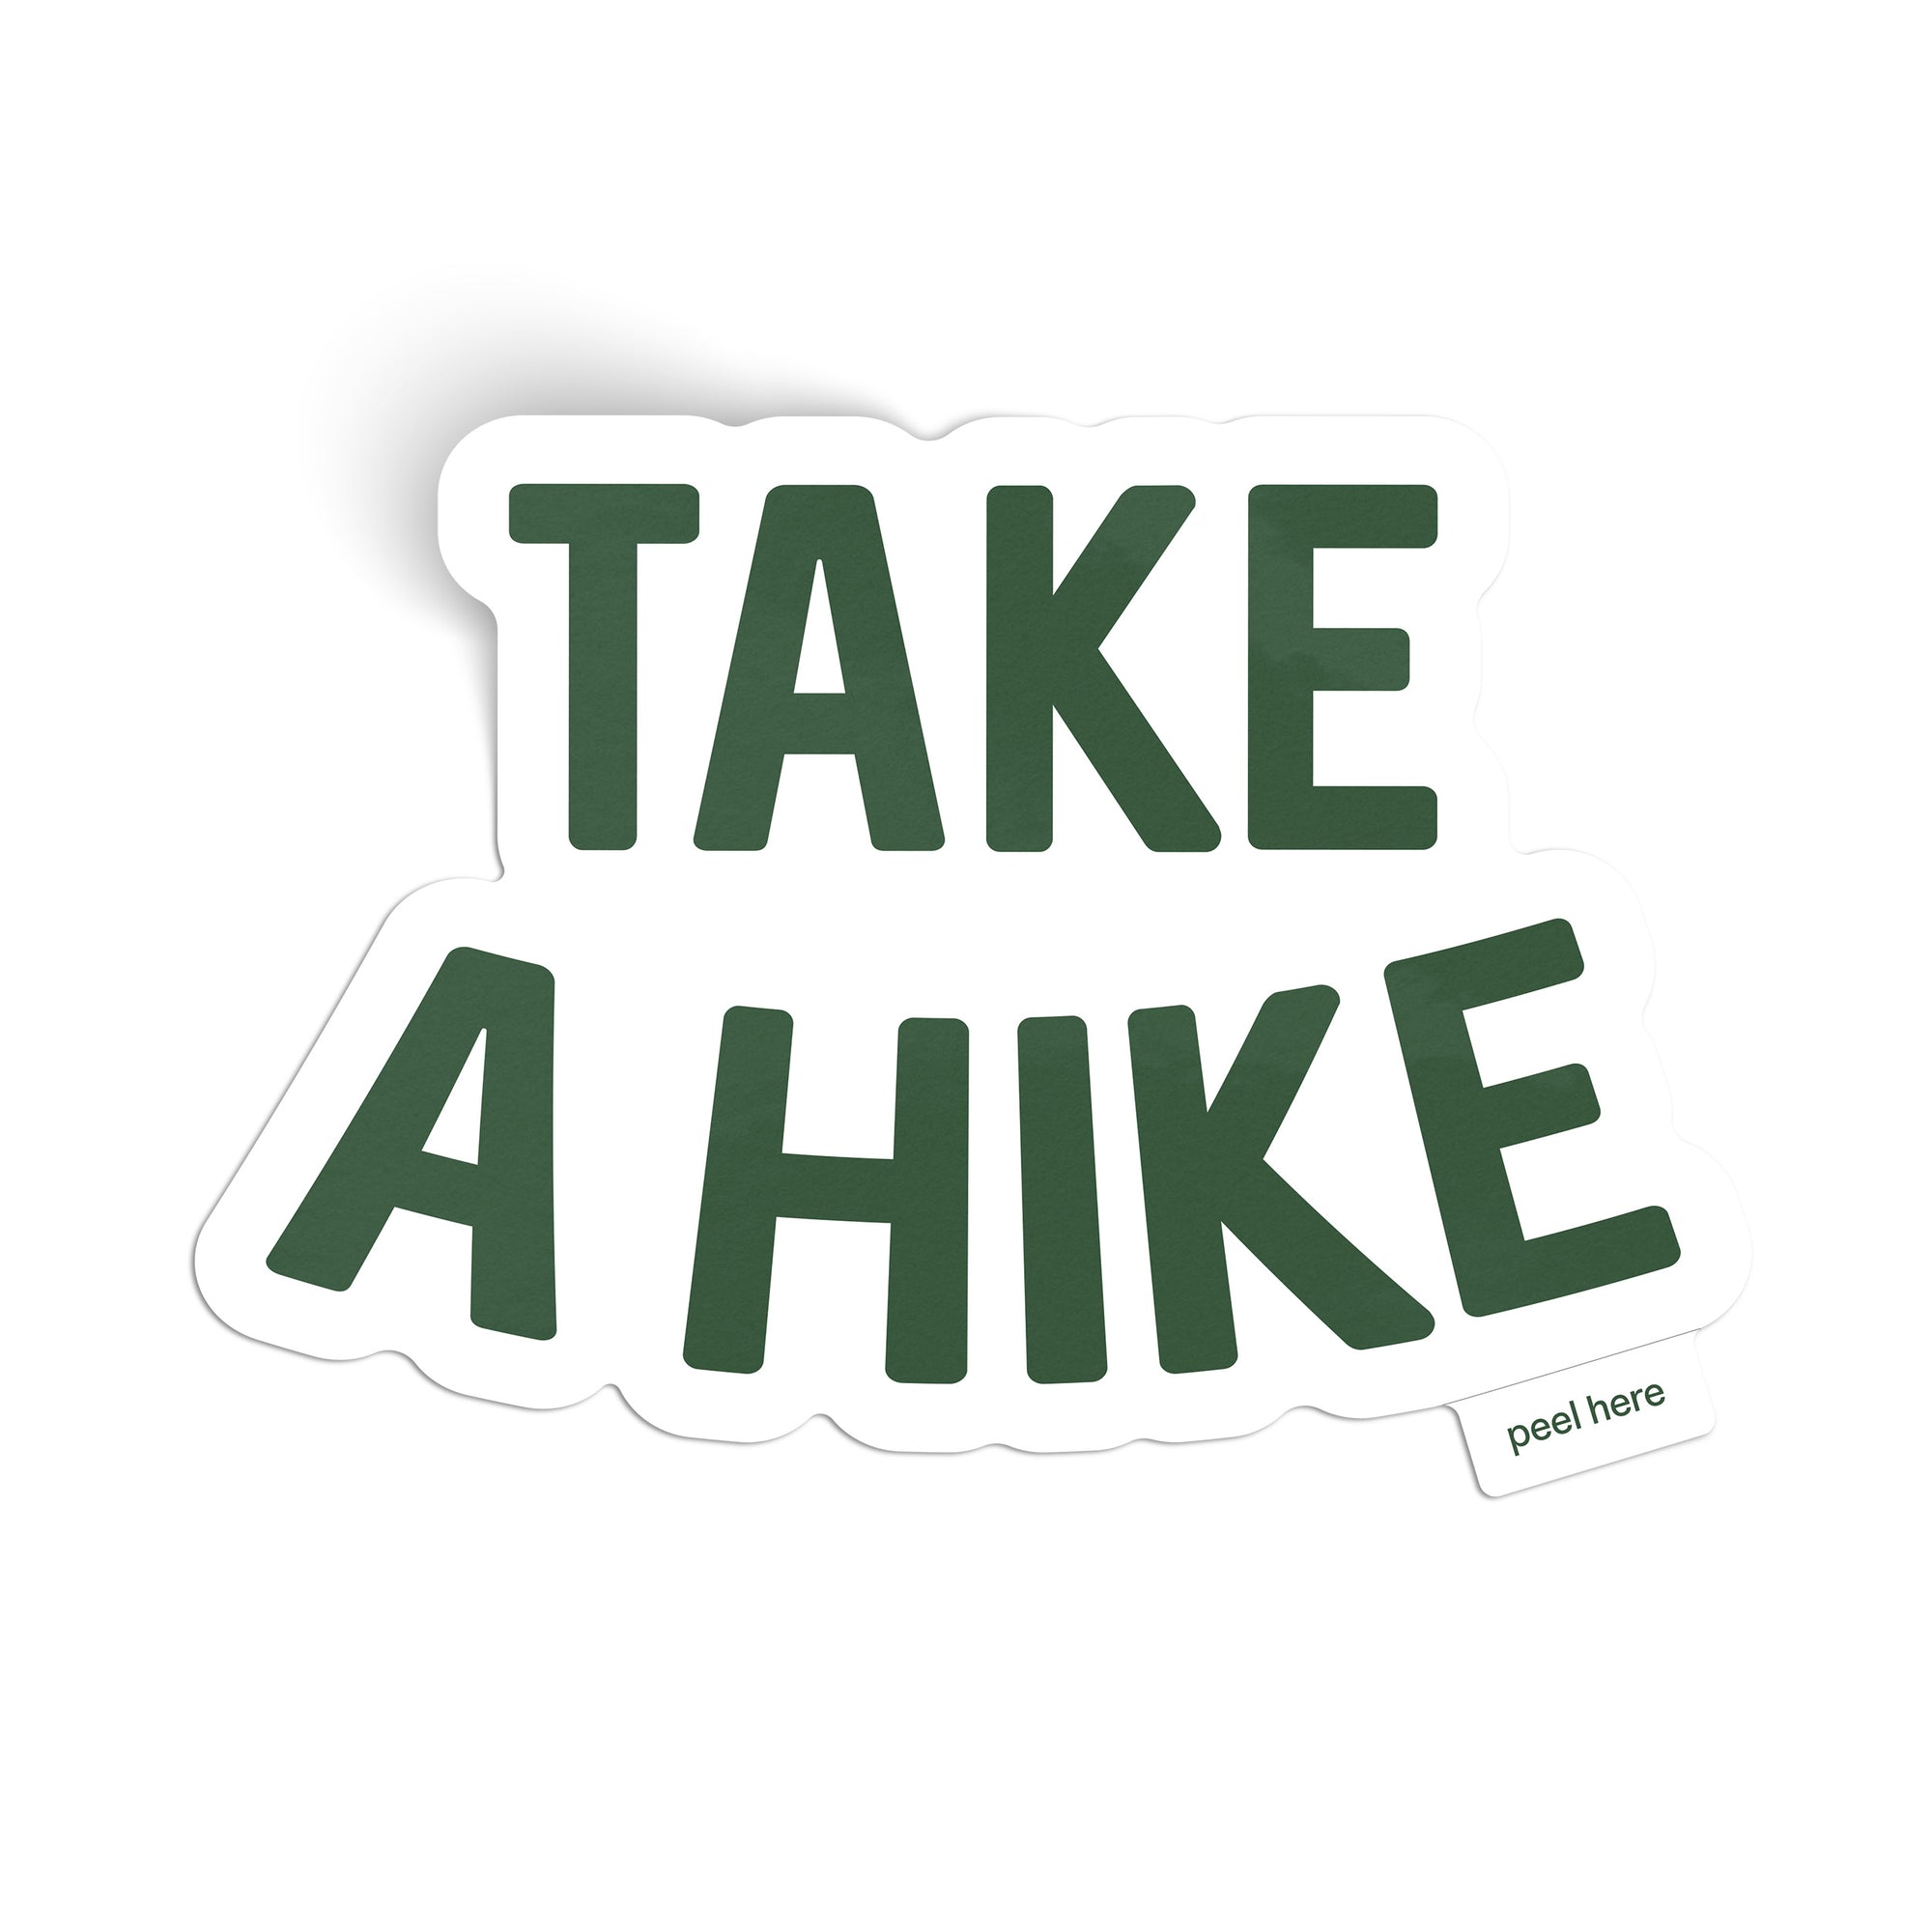 Take A Hike Sticker - green